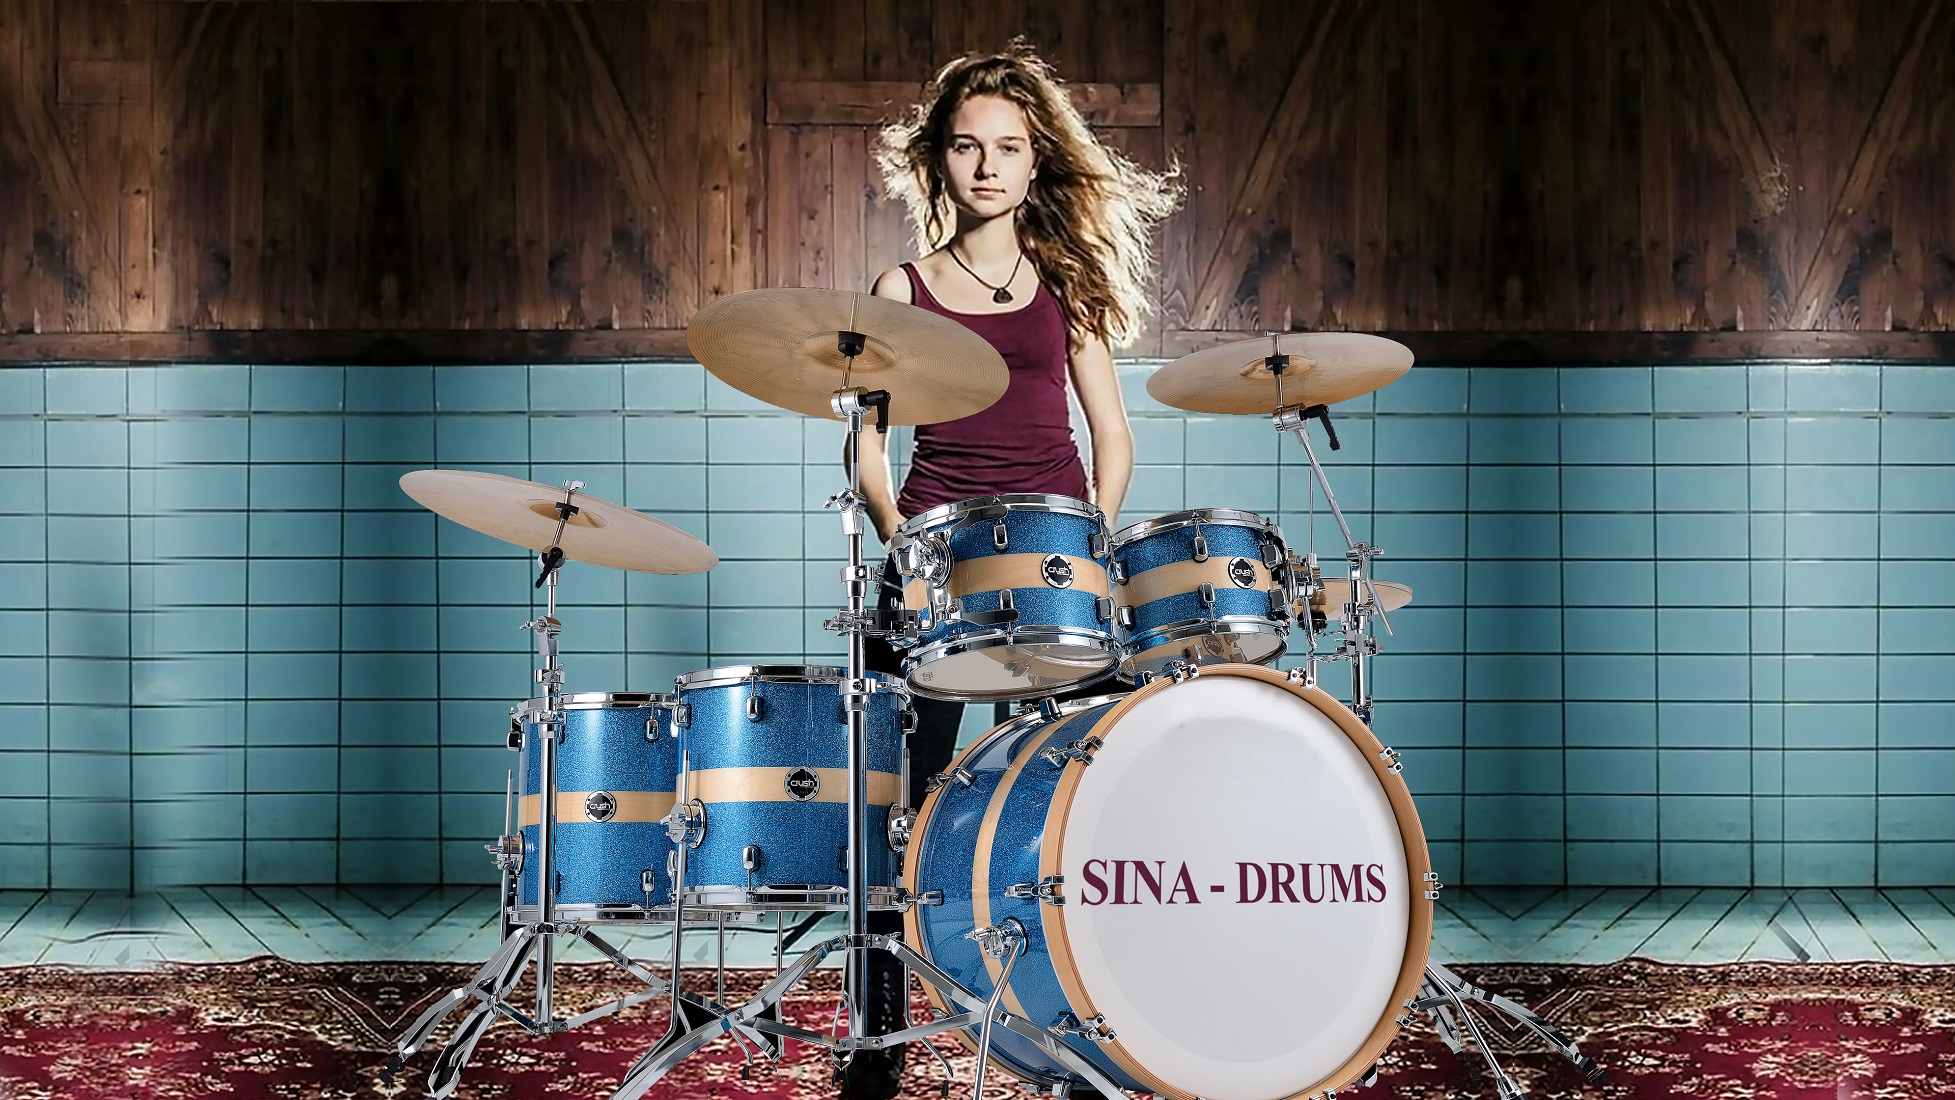 Sina drums wikipedia